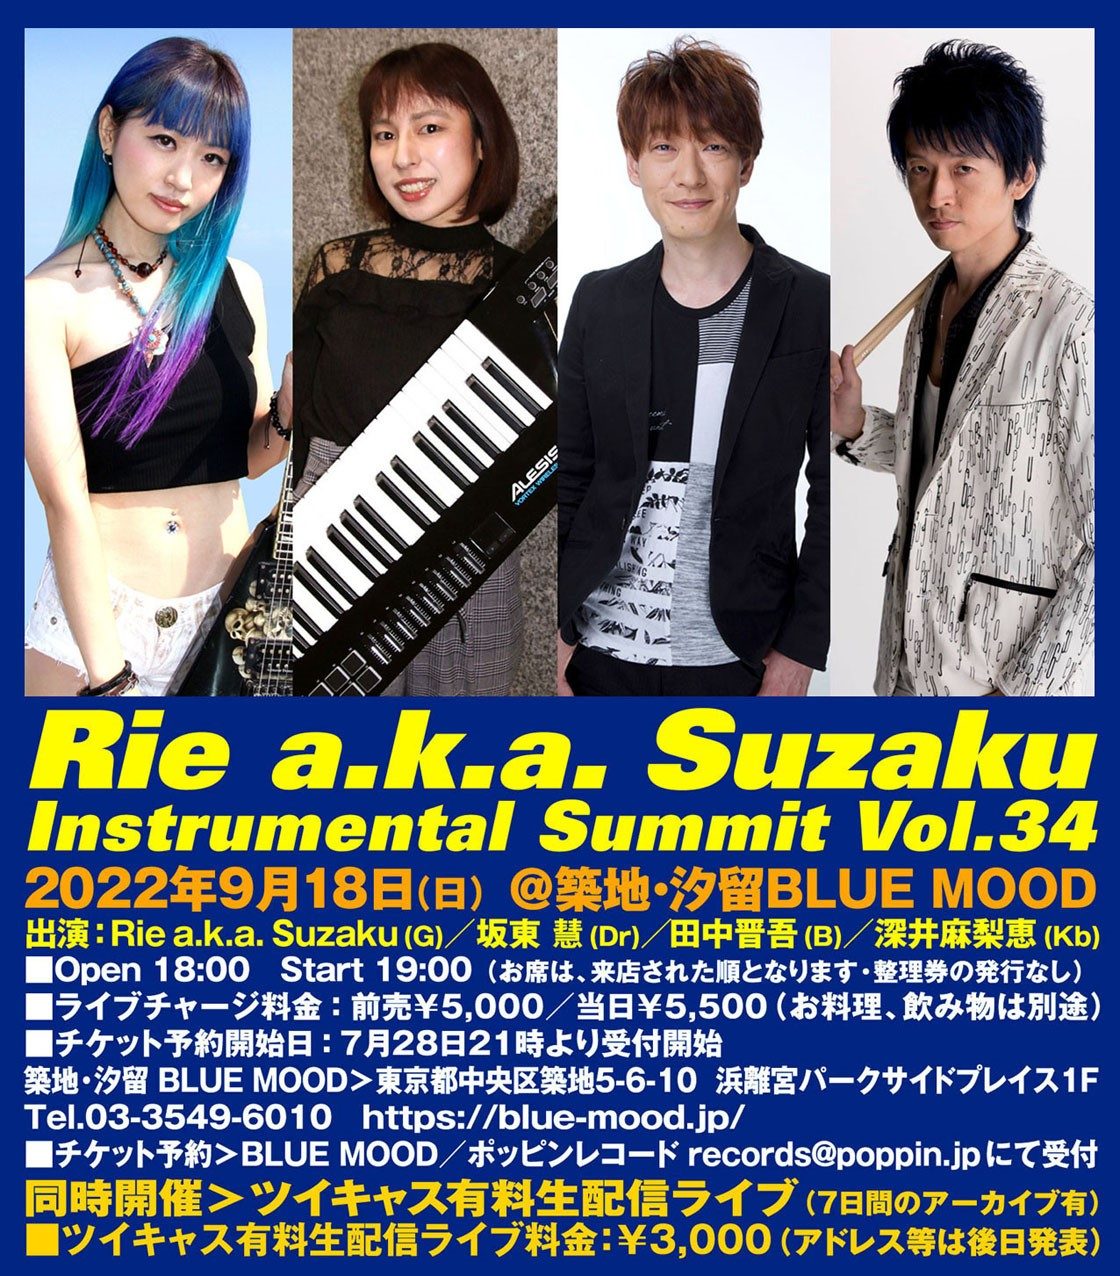 Rie a.k.a. Suzaku Instrumental Summit Vol.34